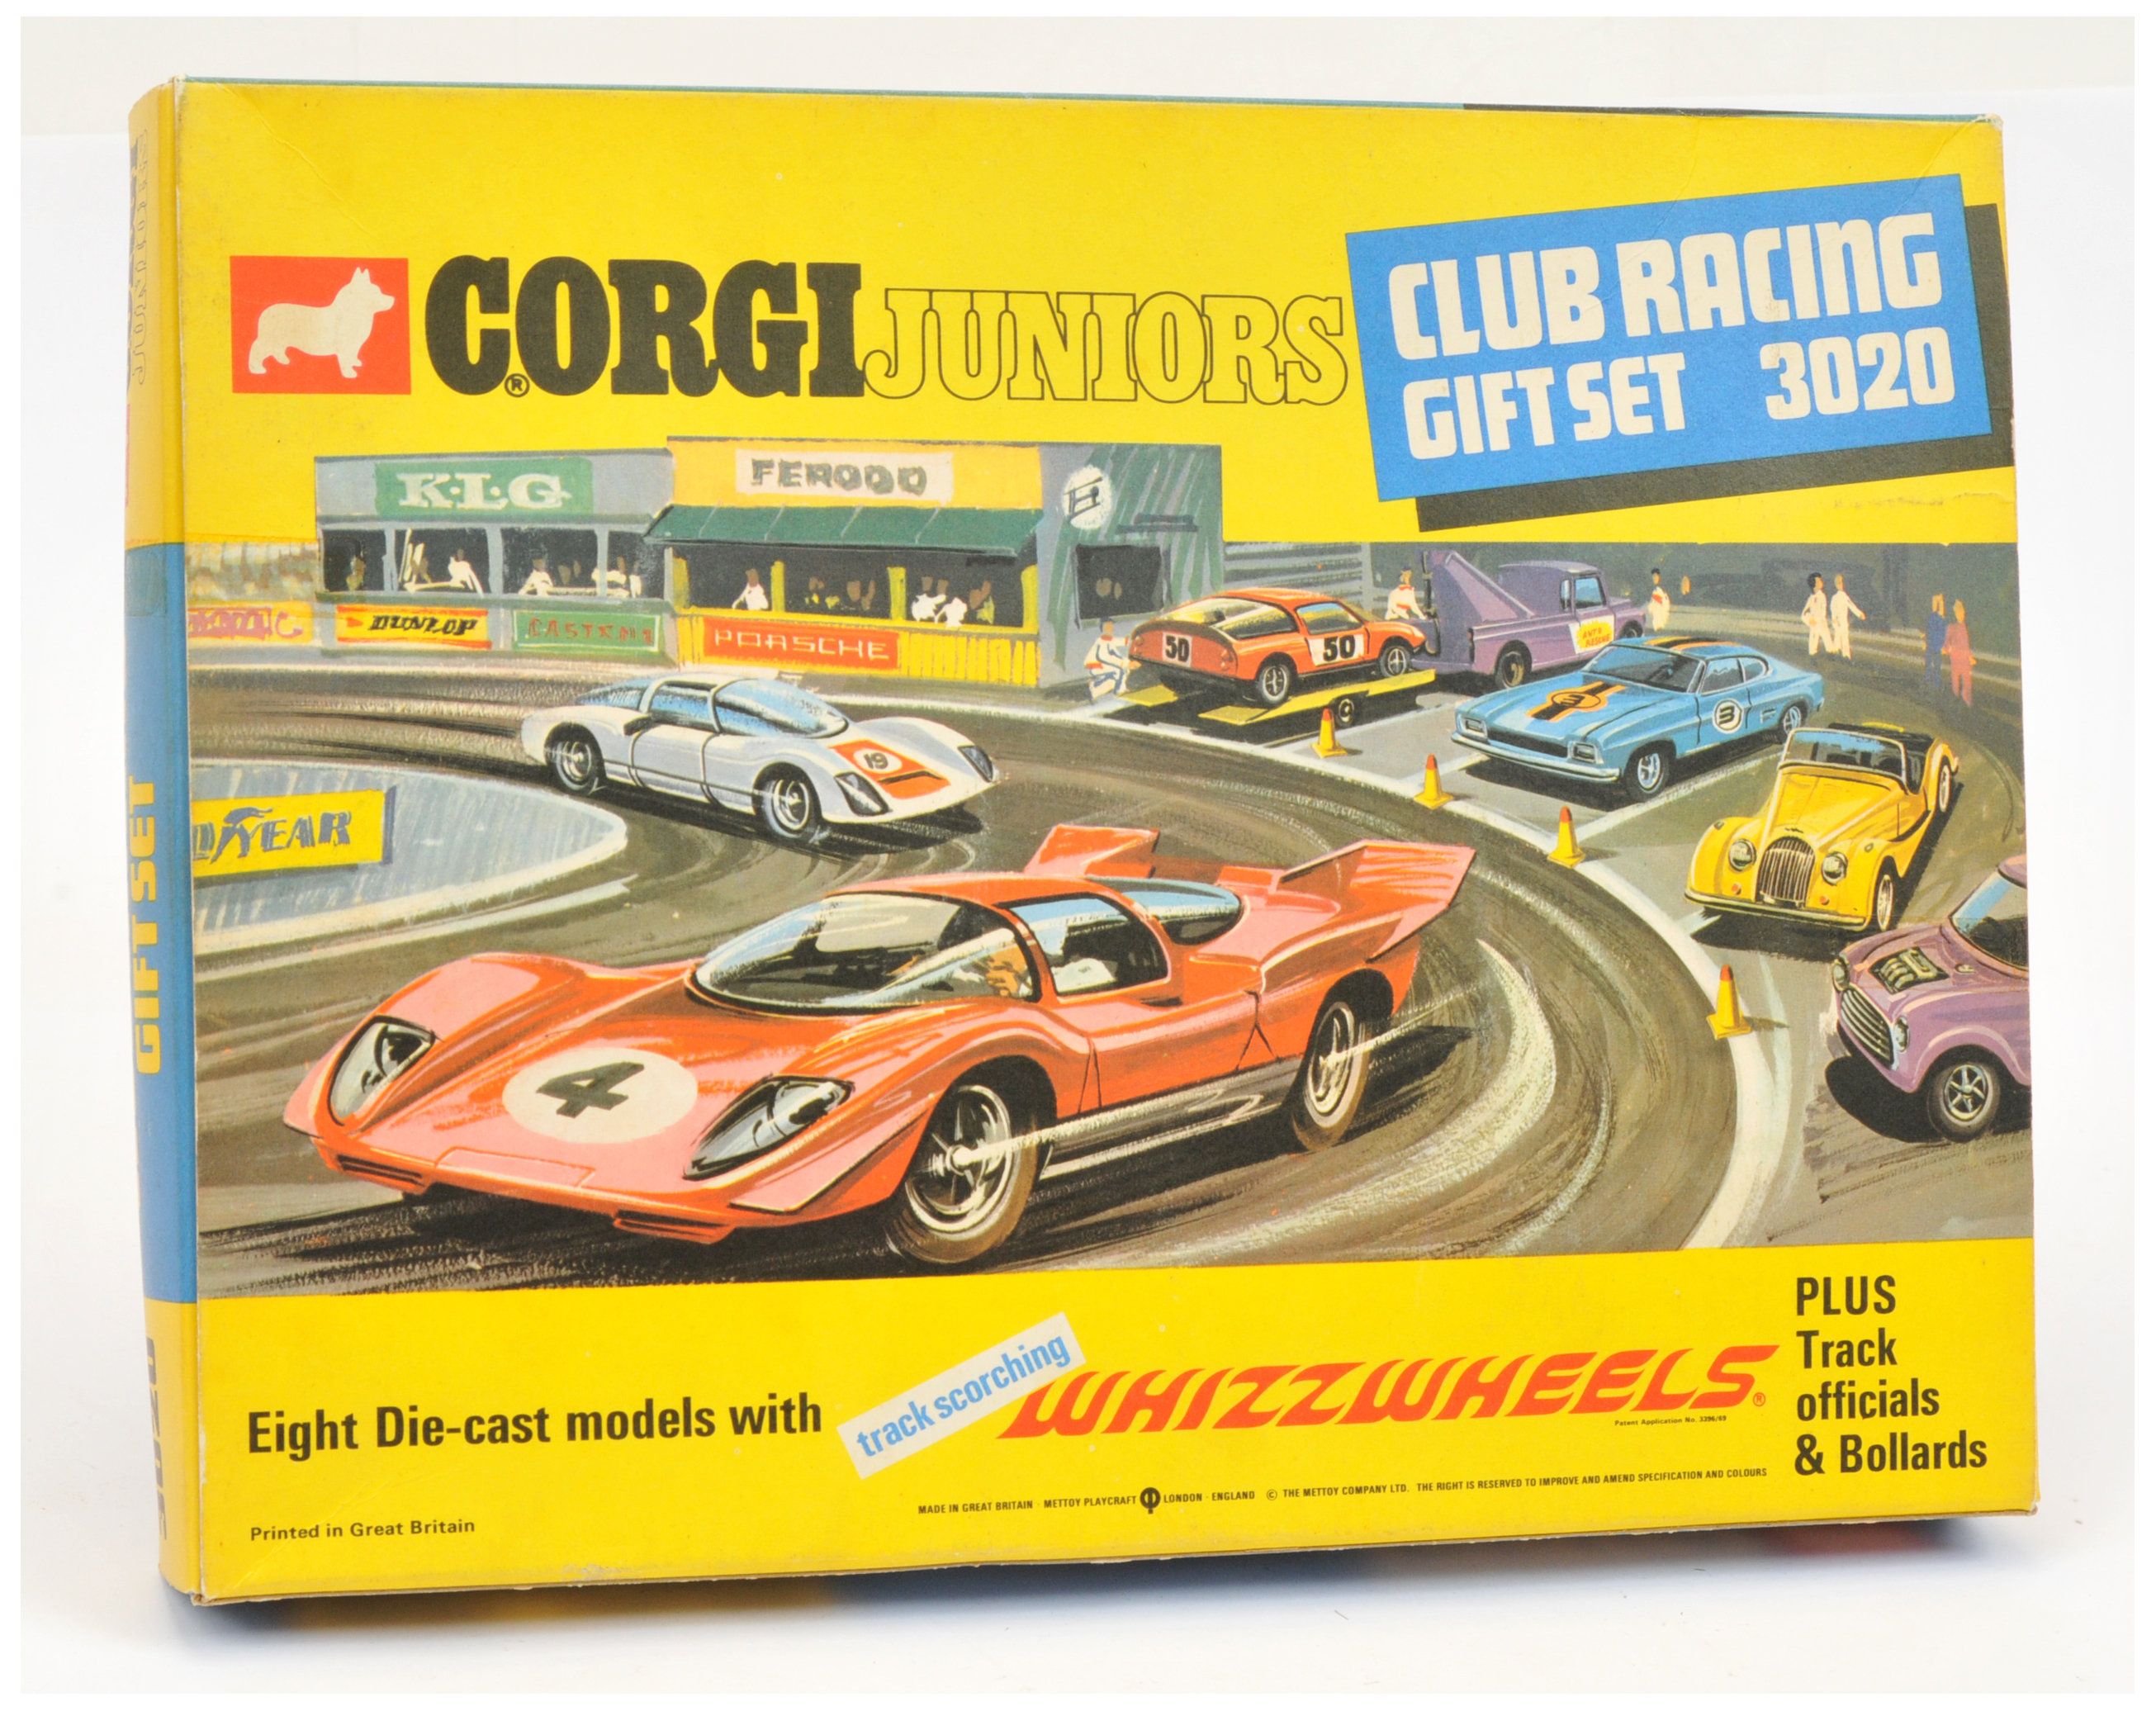 Corgi Toys Juniors 3020 "Club Racing" Gift Set To Include 7 Pieces- Ford Capri, Land Rover Wrecke... - Image 2 of 2